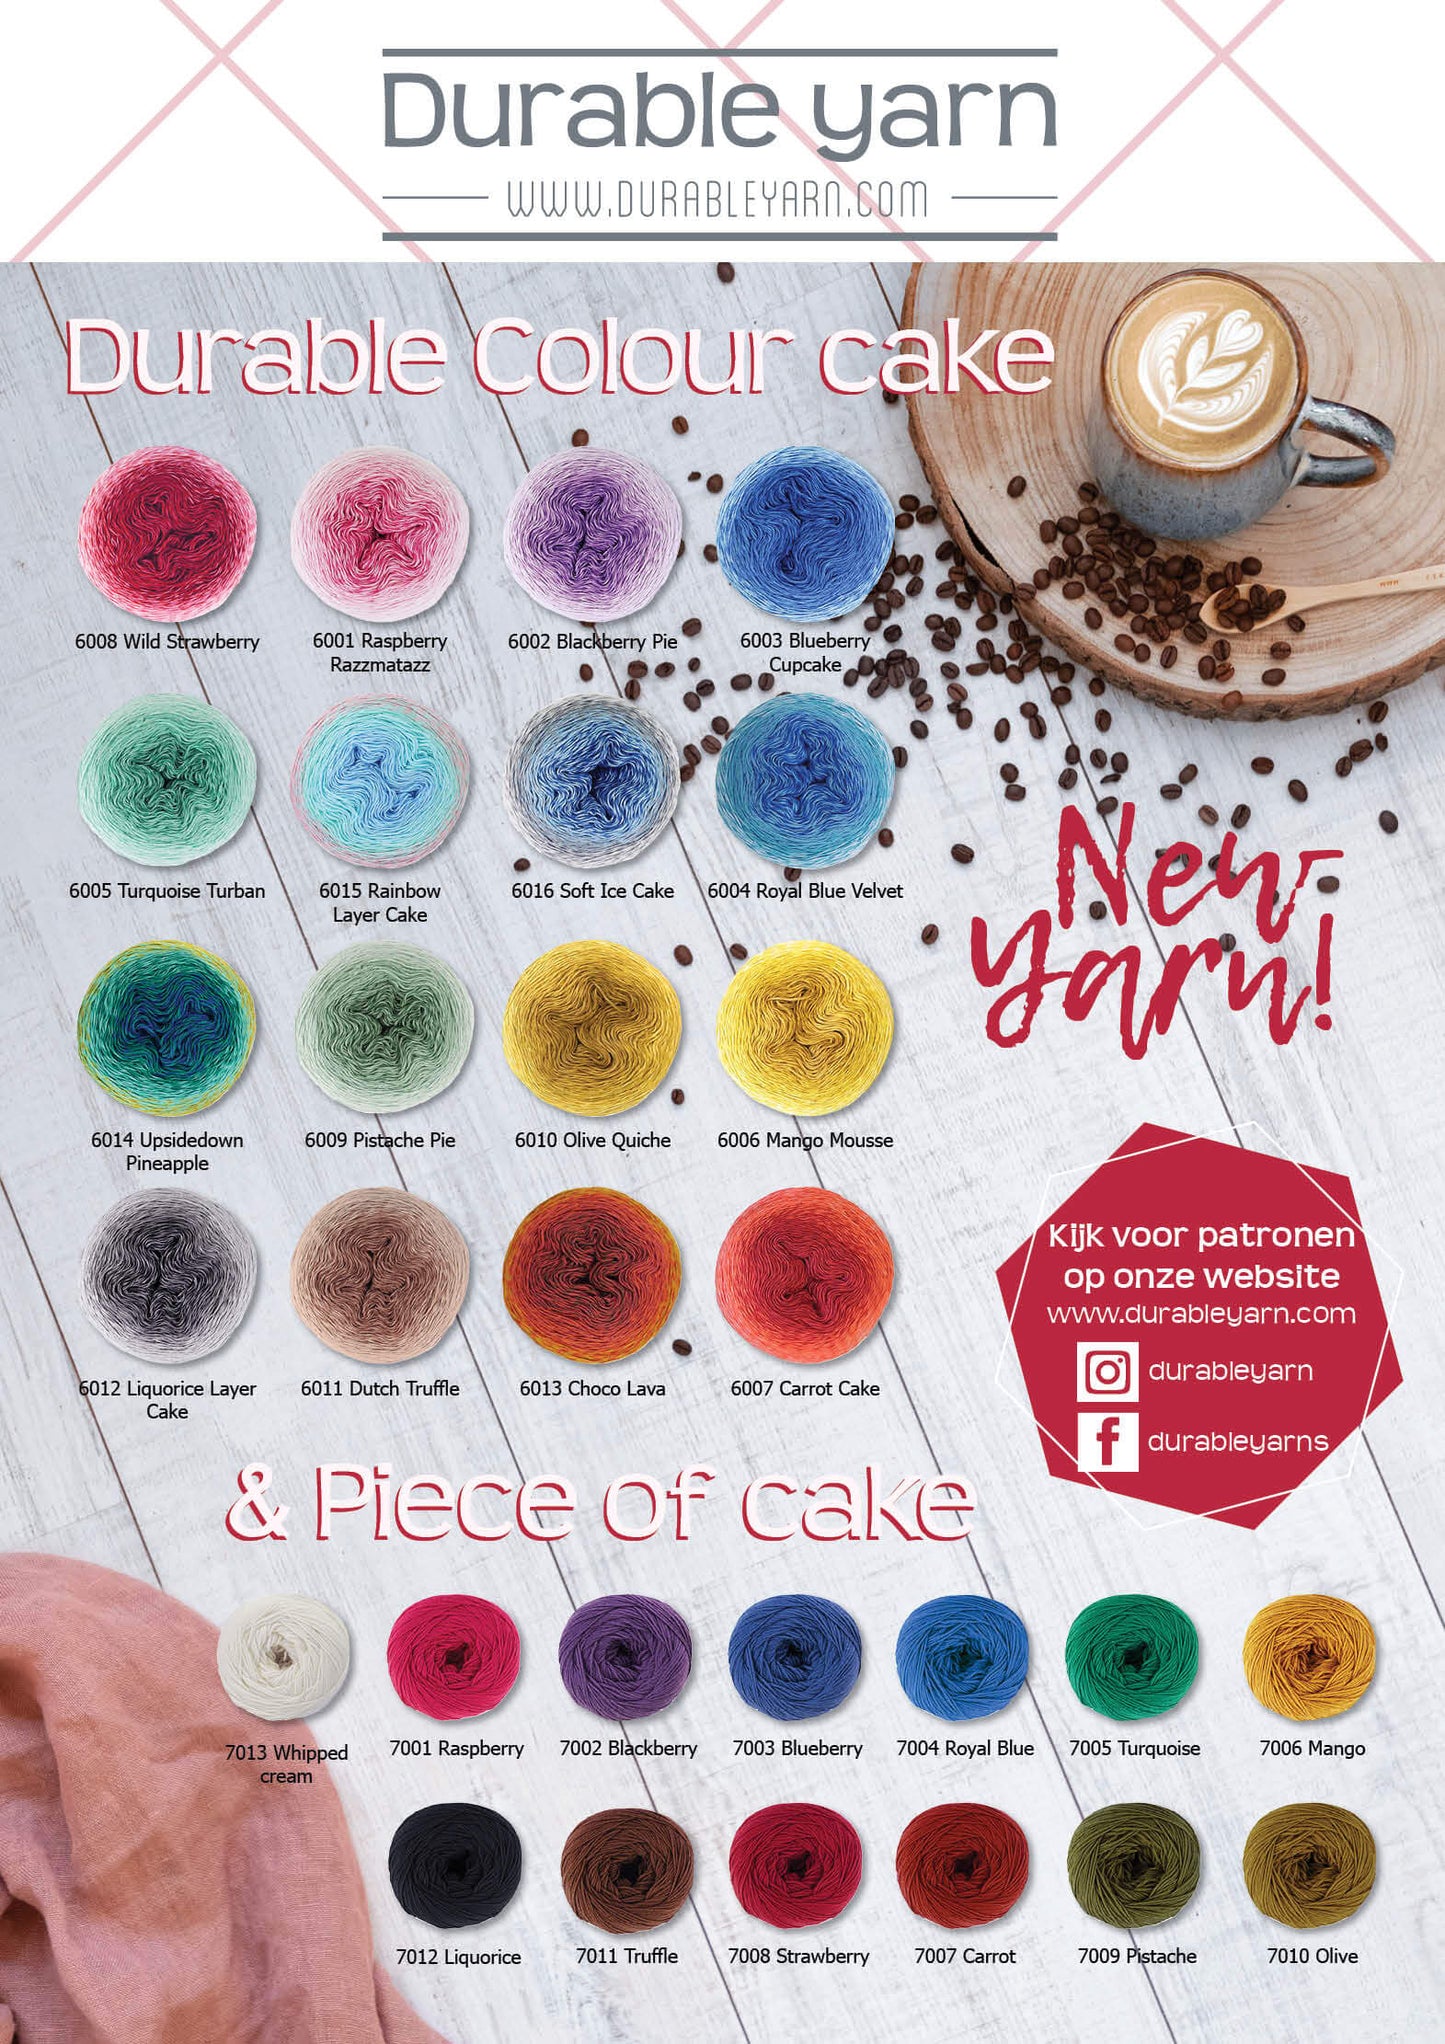 Durable Colour Cake - 6010 Olive Quiche